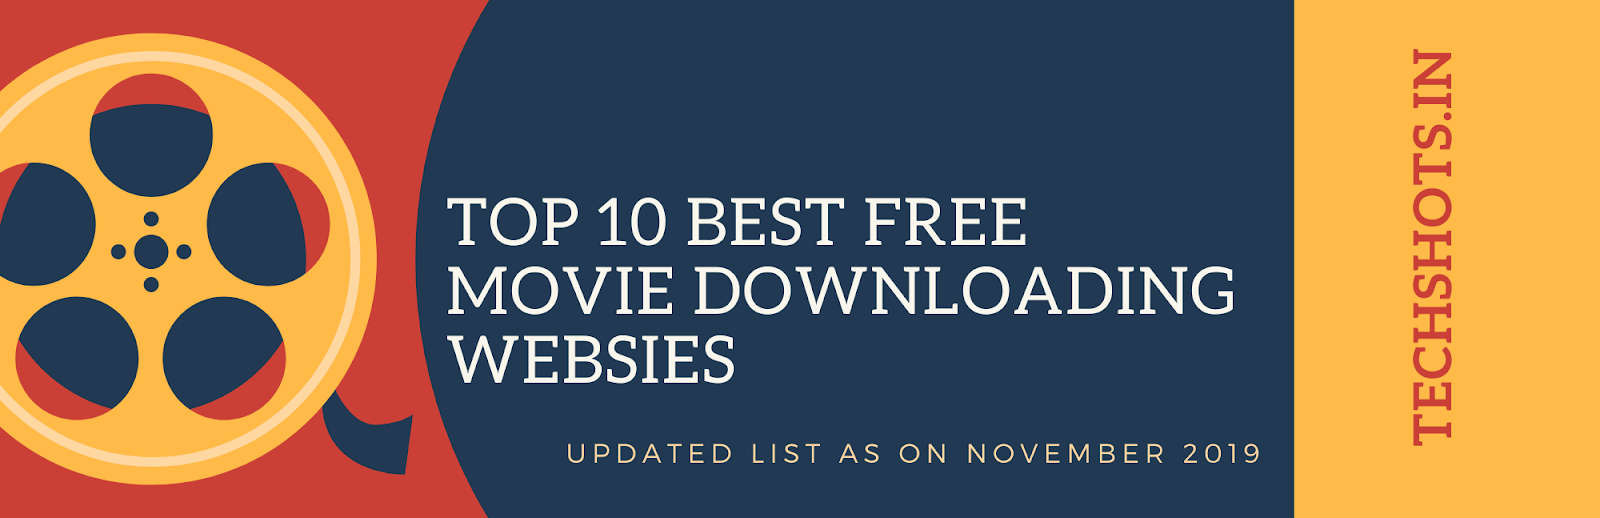 best free movie download websites in india